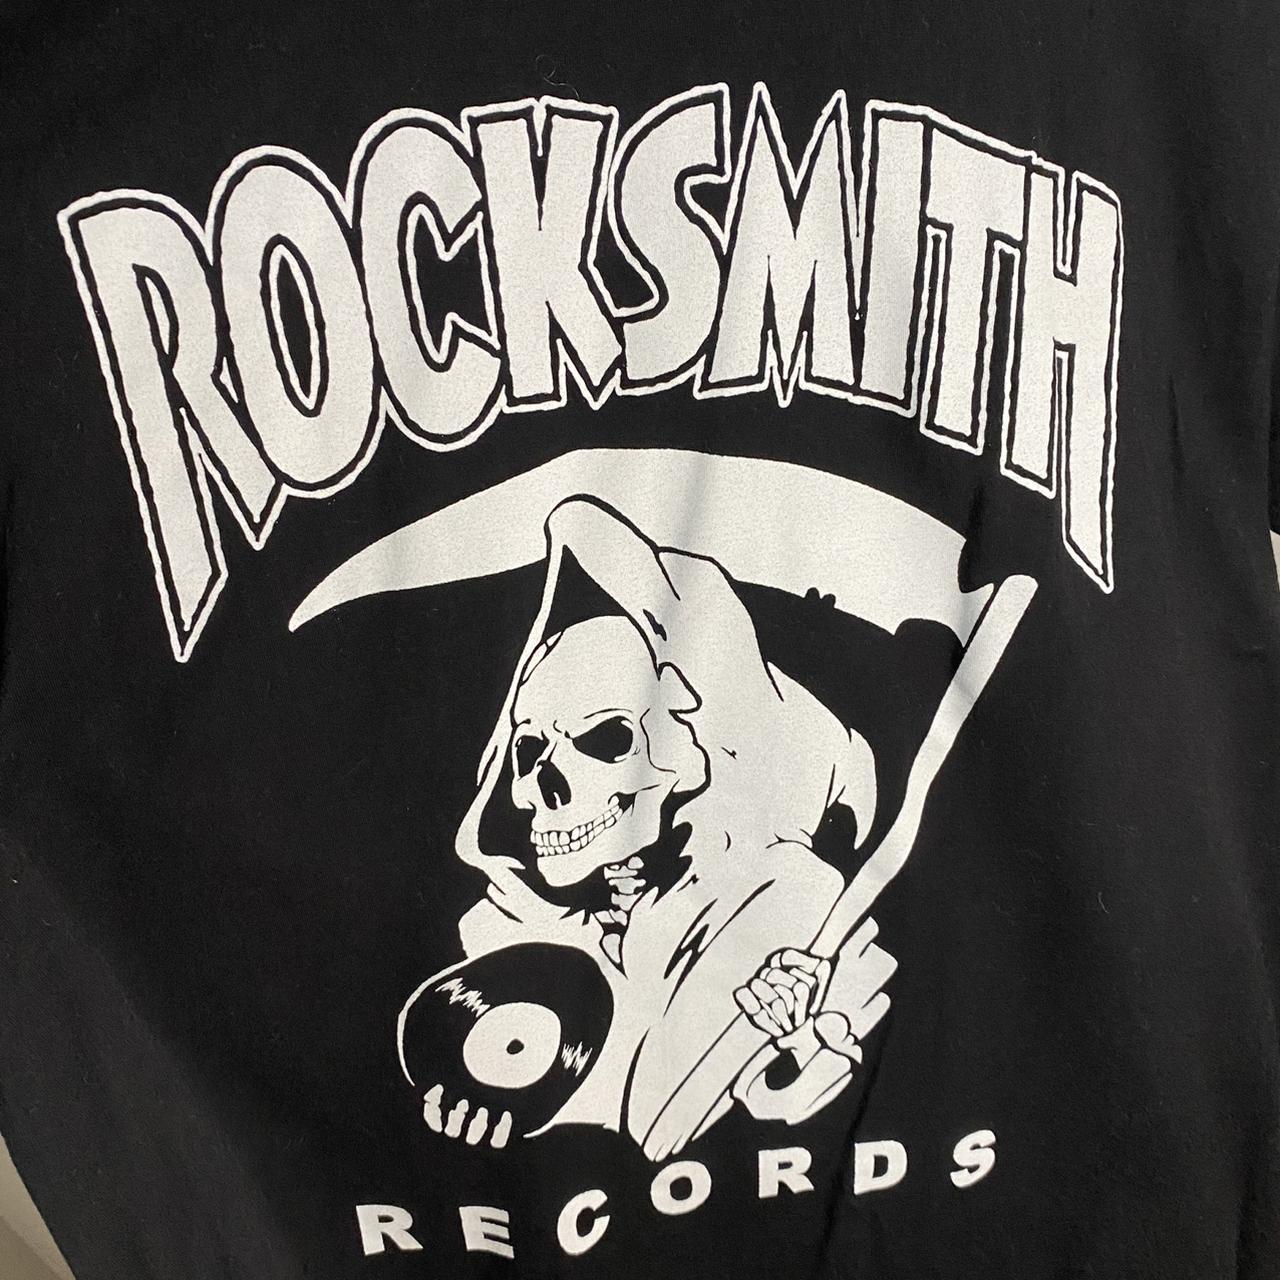 rocksmith, Shirts